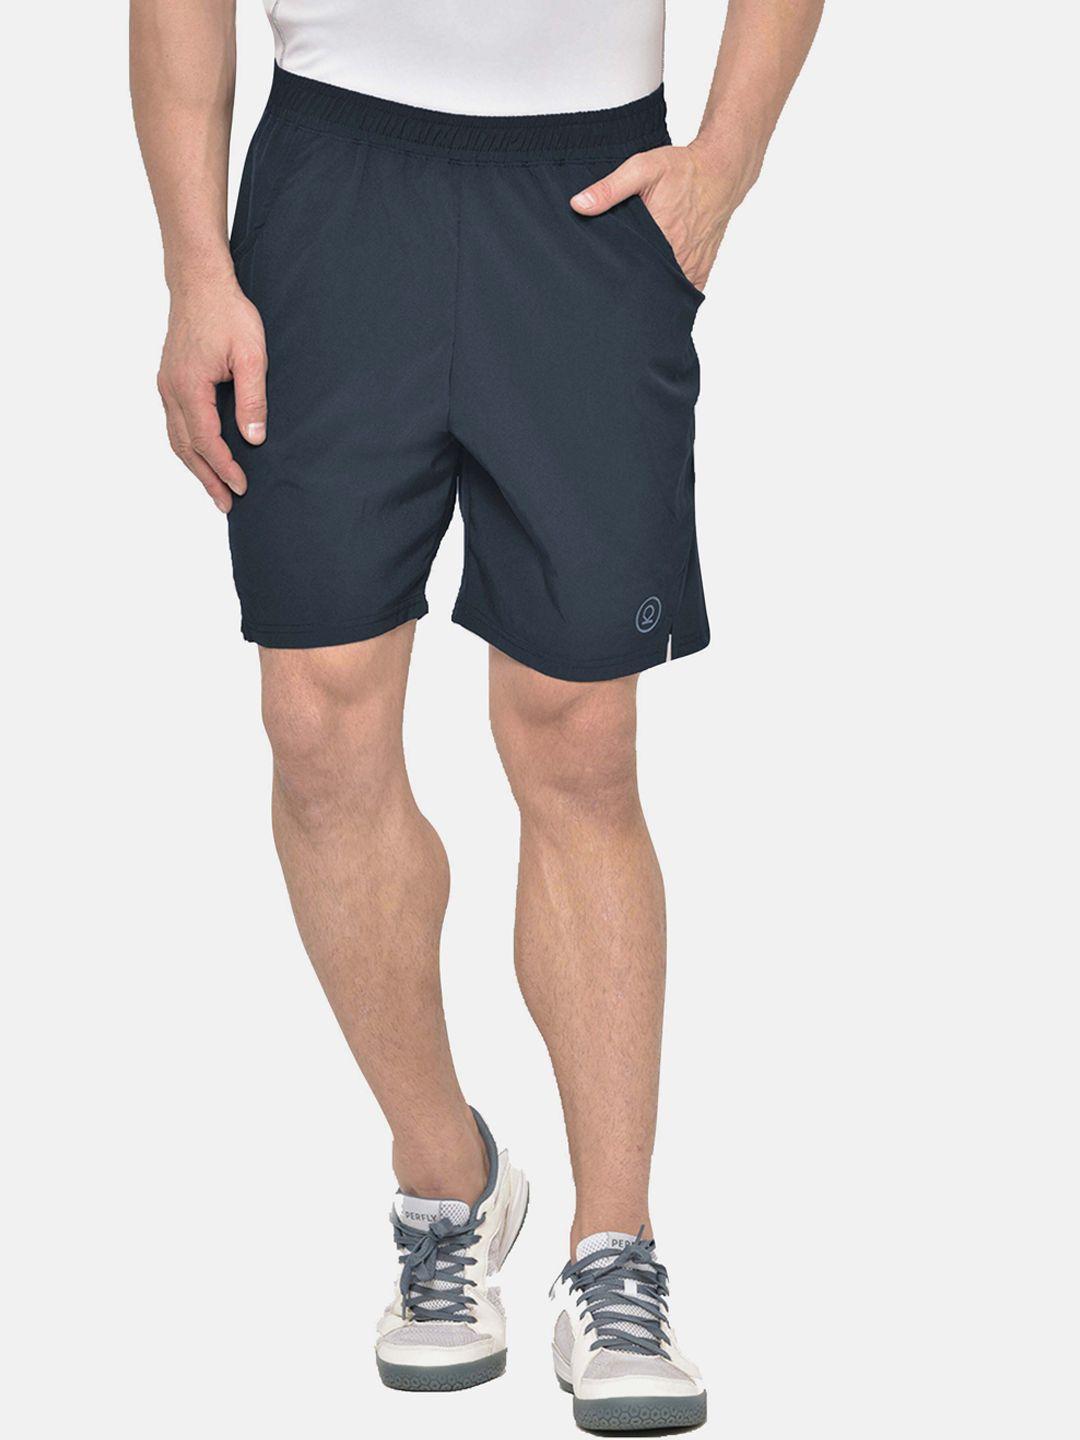 chkokko-men-blue-running-sports-shorts